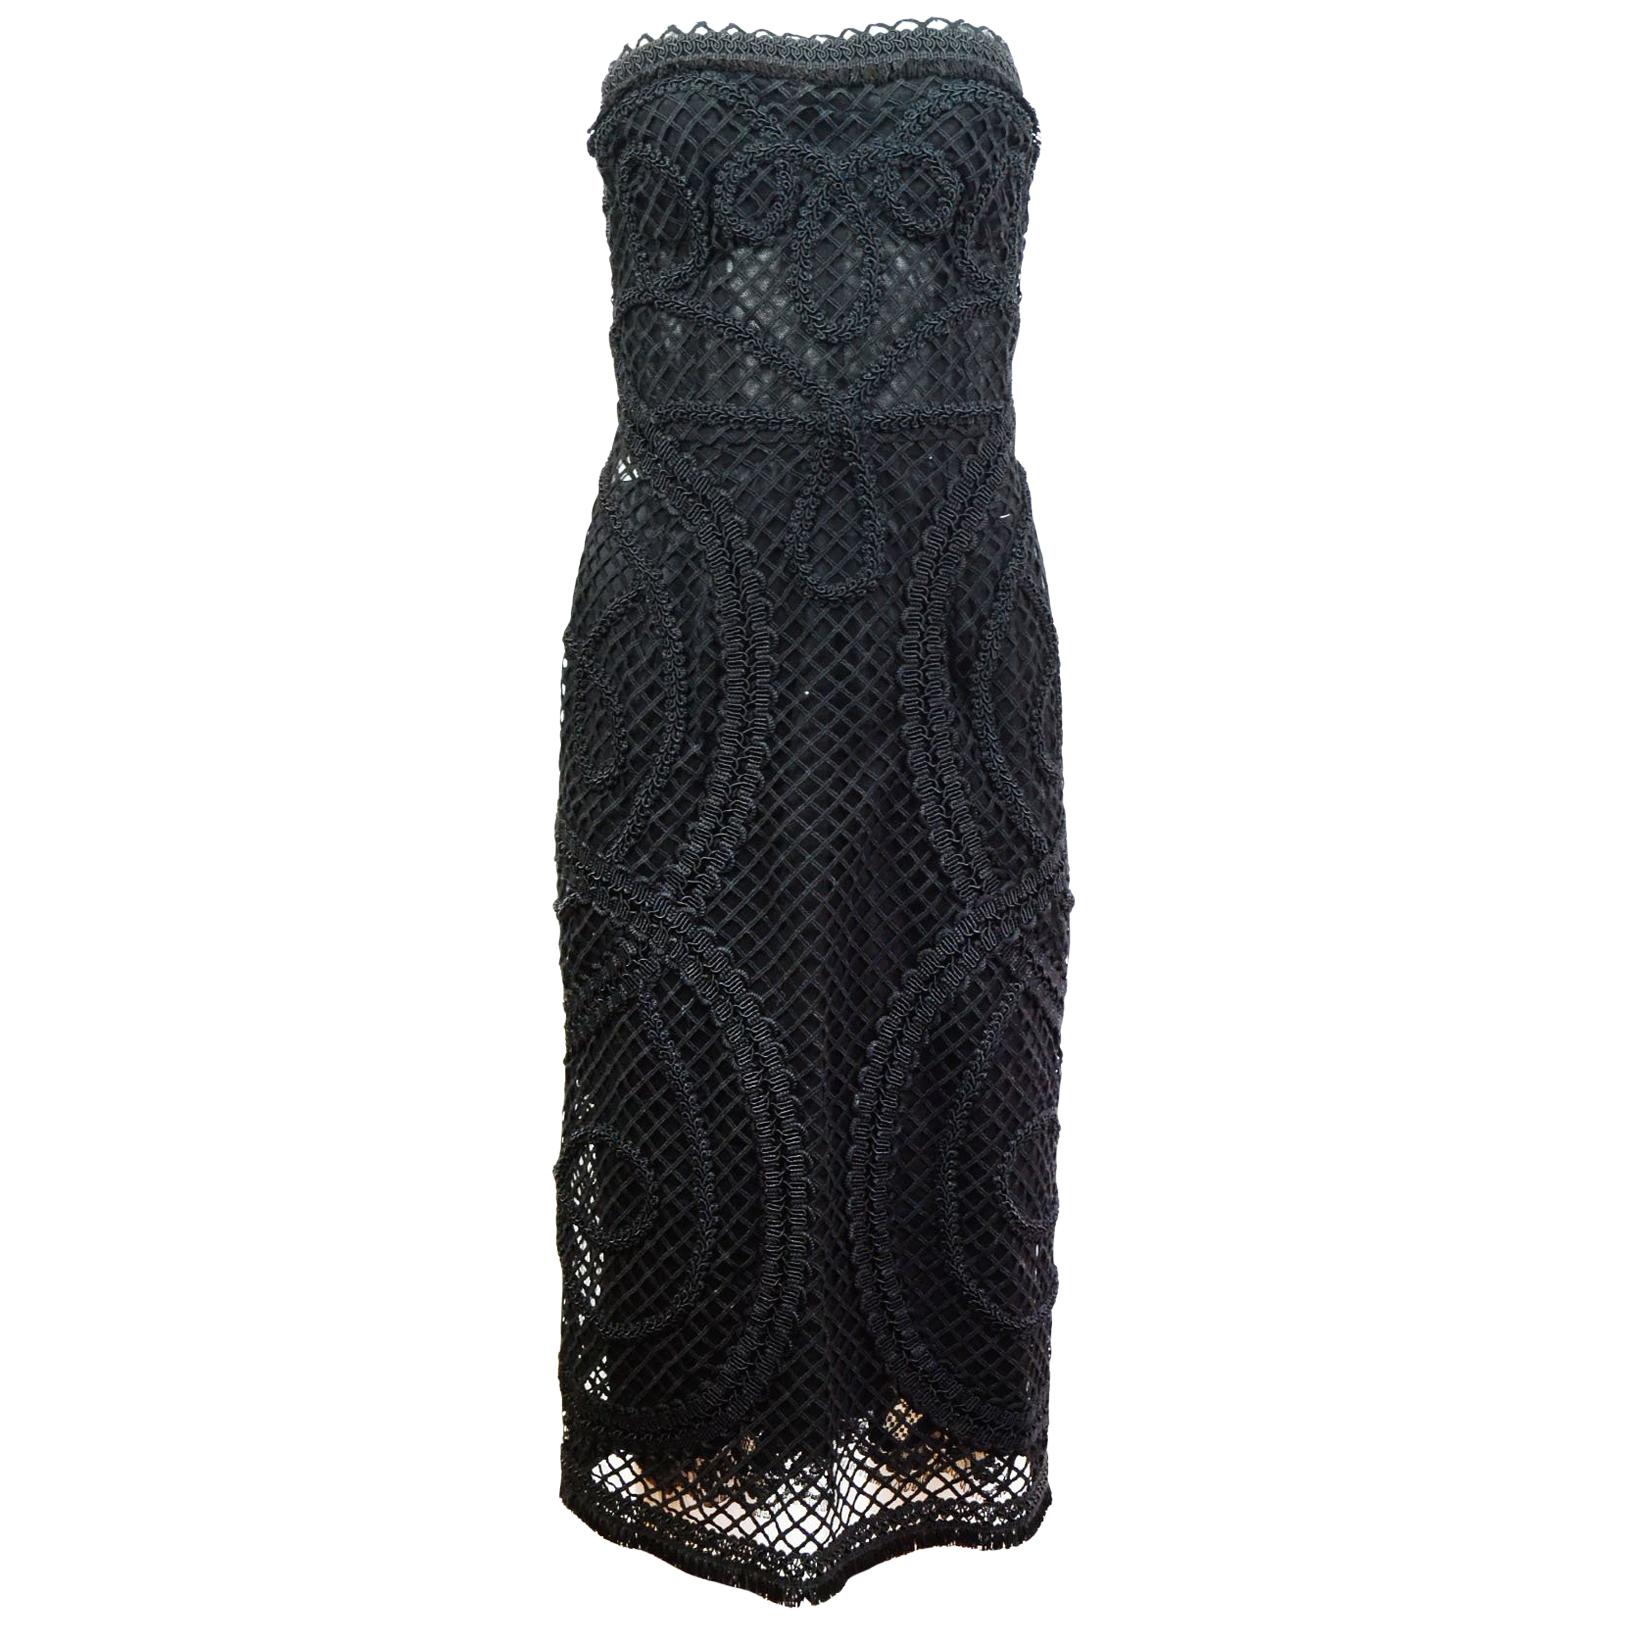 Dolce & Gabbana '15 Runway Black Embroidered Strapless Dress Sz IT48/US12